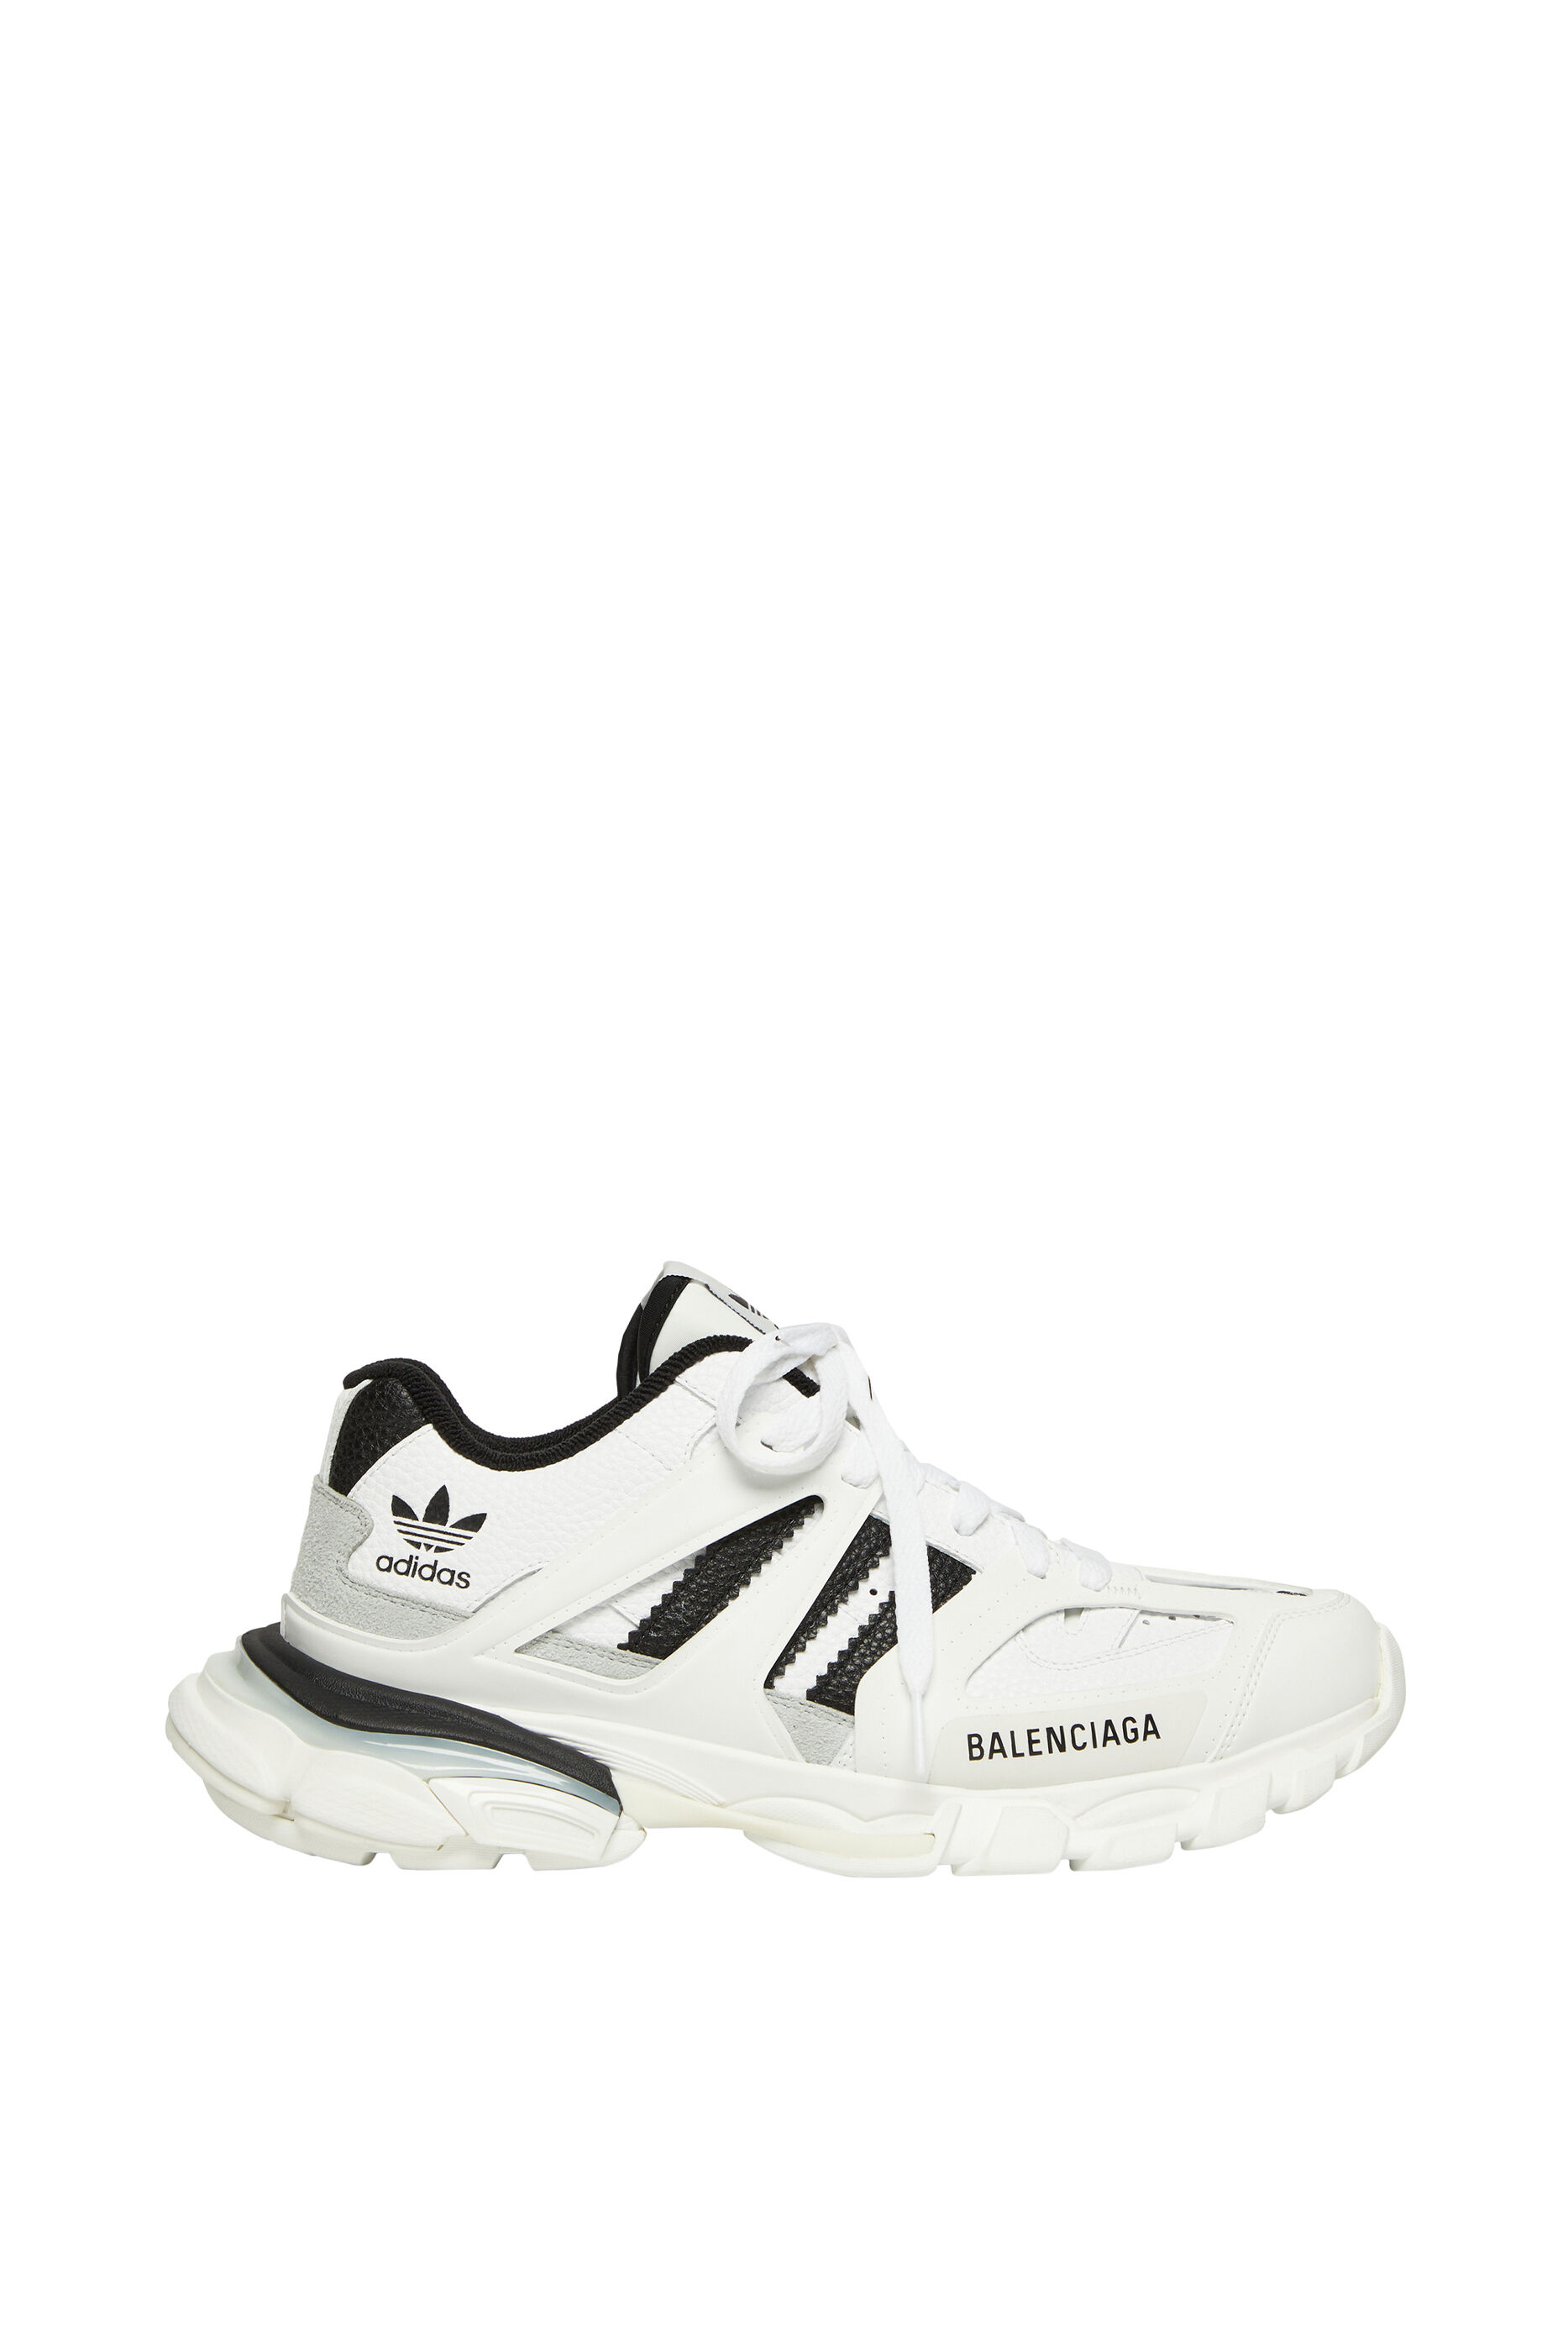 Balenciaga Womens Triple S White / Silver Sneakers | eBay